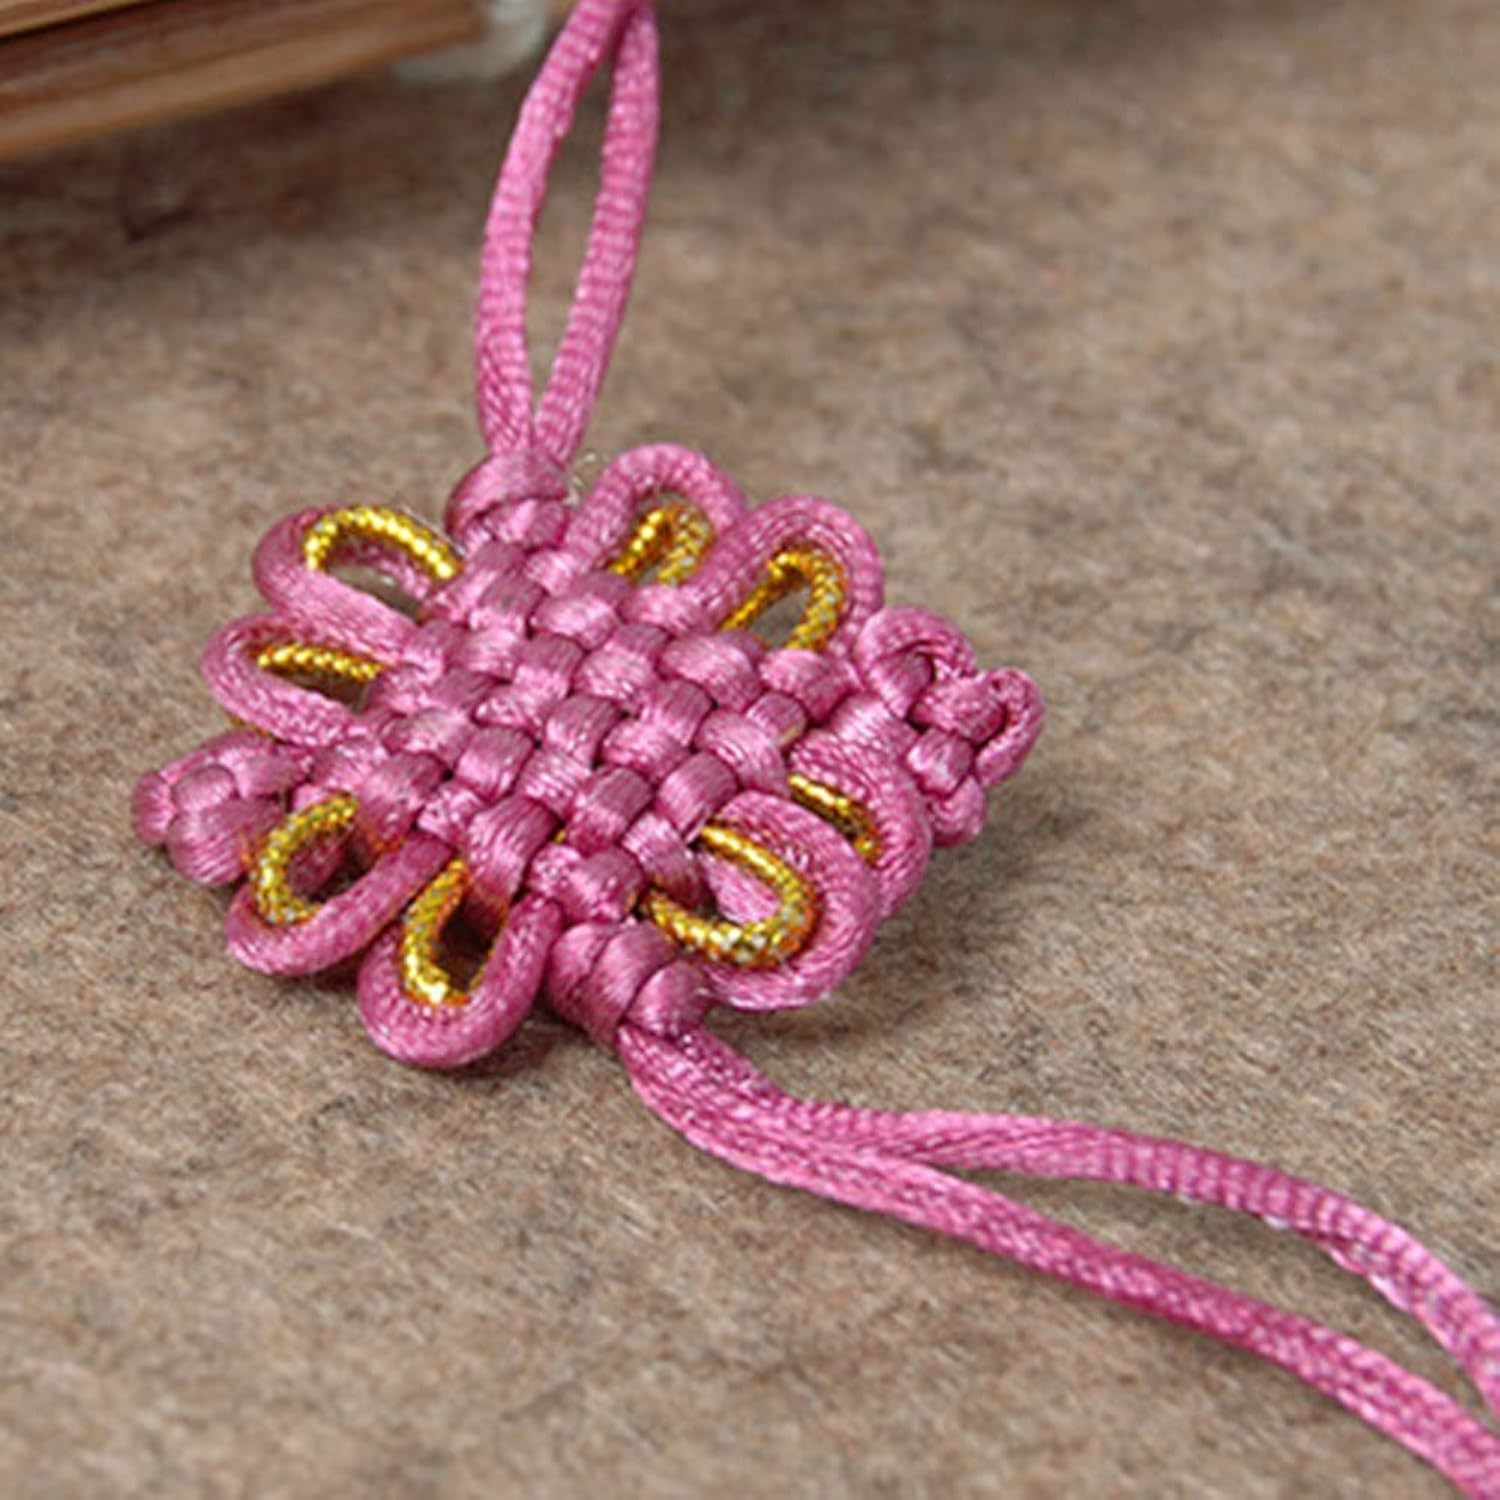 Wholesale PandaHall 10 Color 2mm Satin Rattail Cord String Nylon Trim Silk  Cord for Friendship Bracelet 